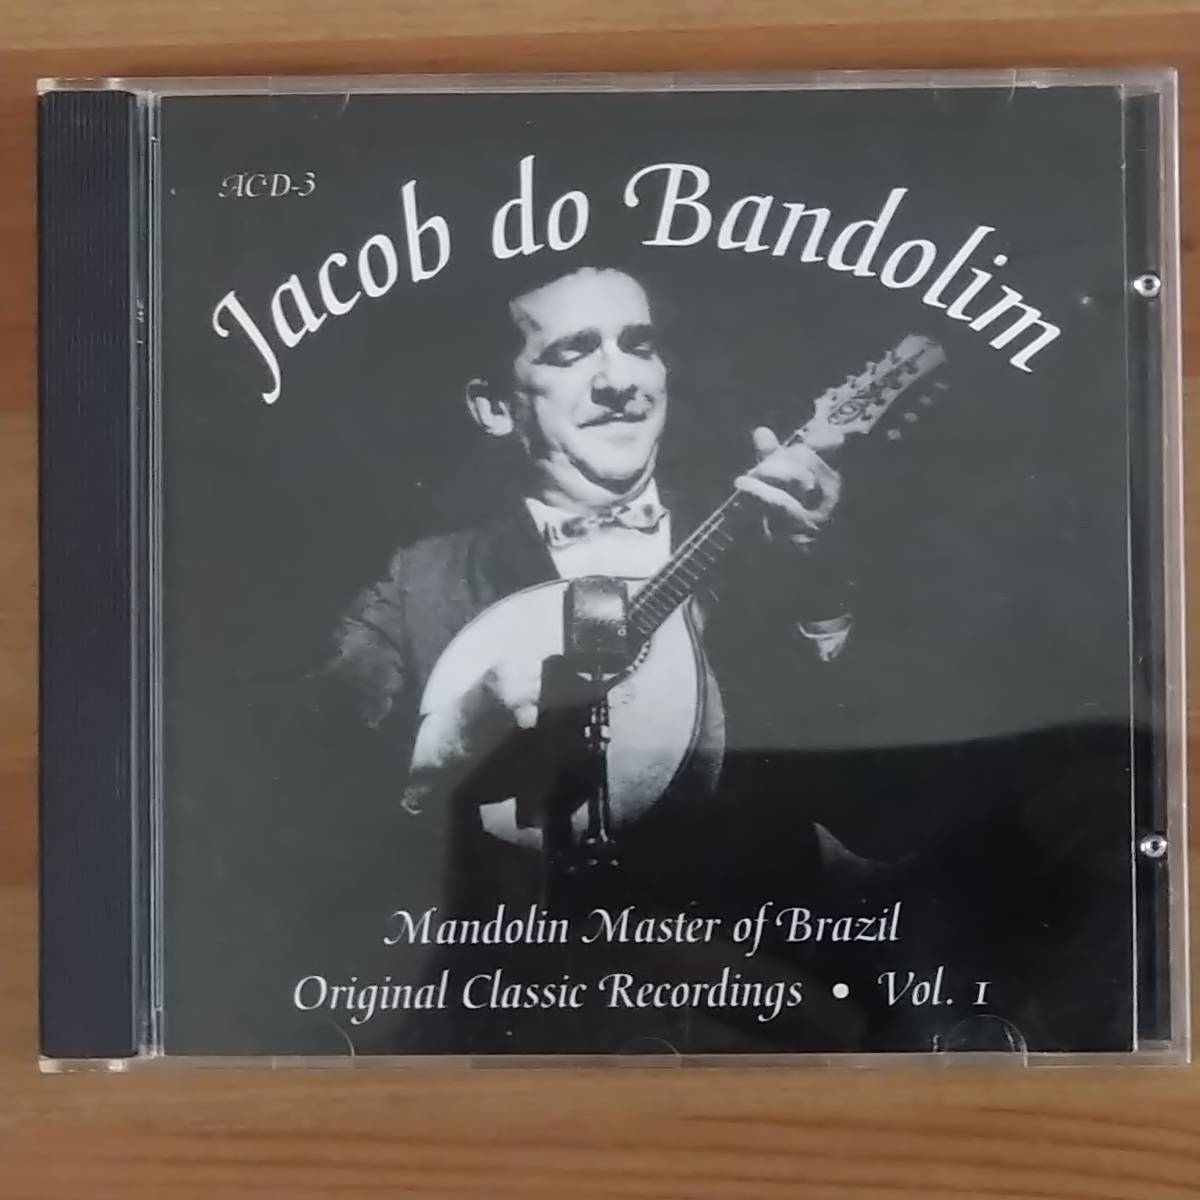 *Jacob do Bandolim Mandolin Master of Brazil Original Classic Recordings*Vol.1 ACD-3 records out of production 